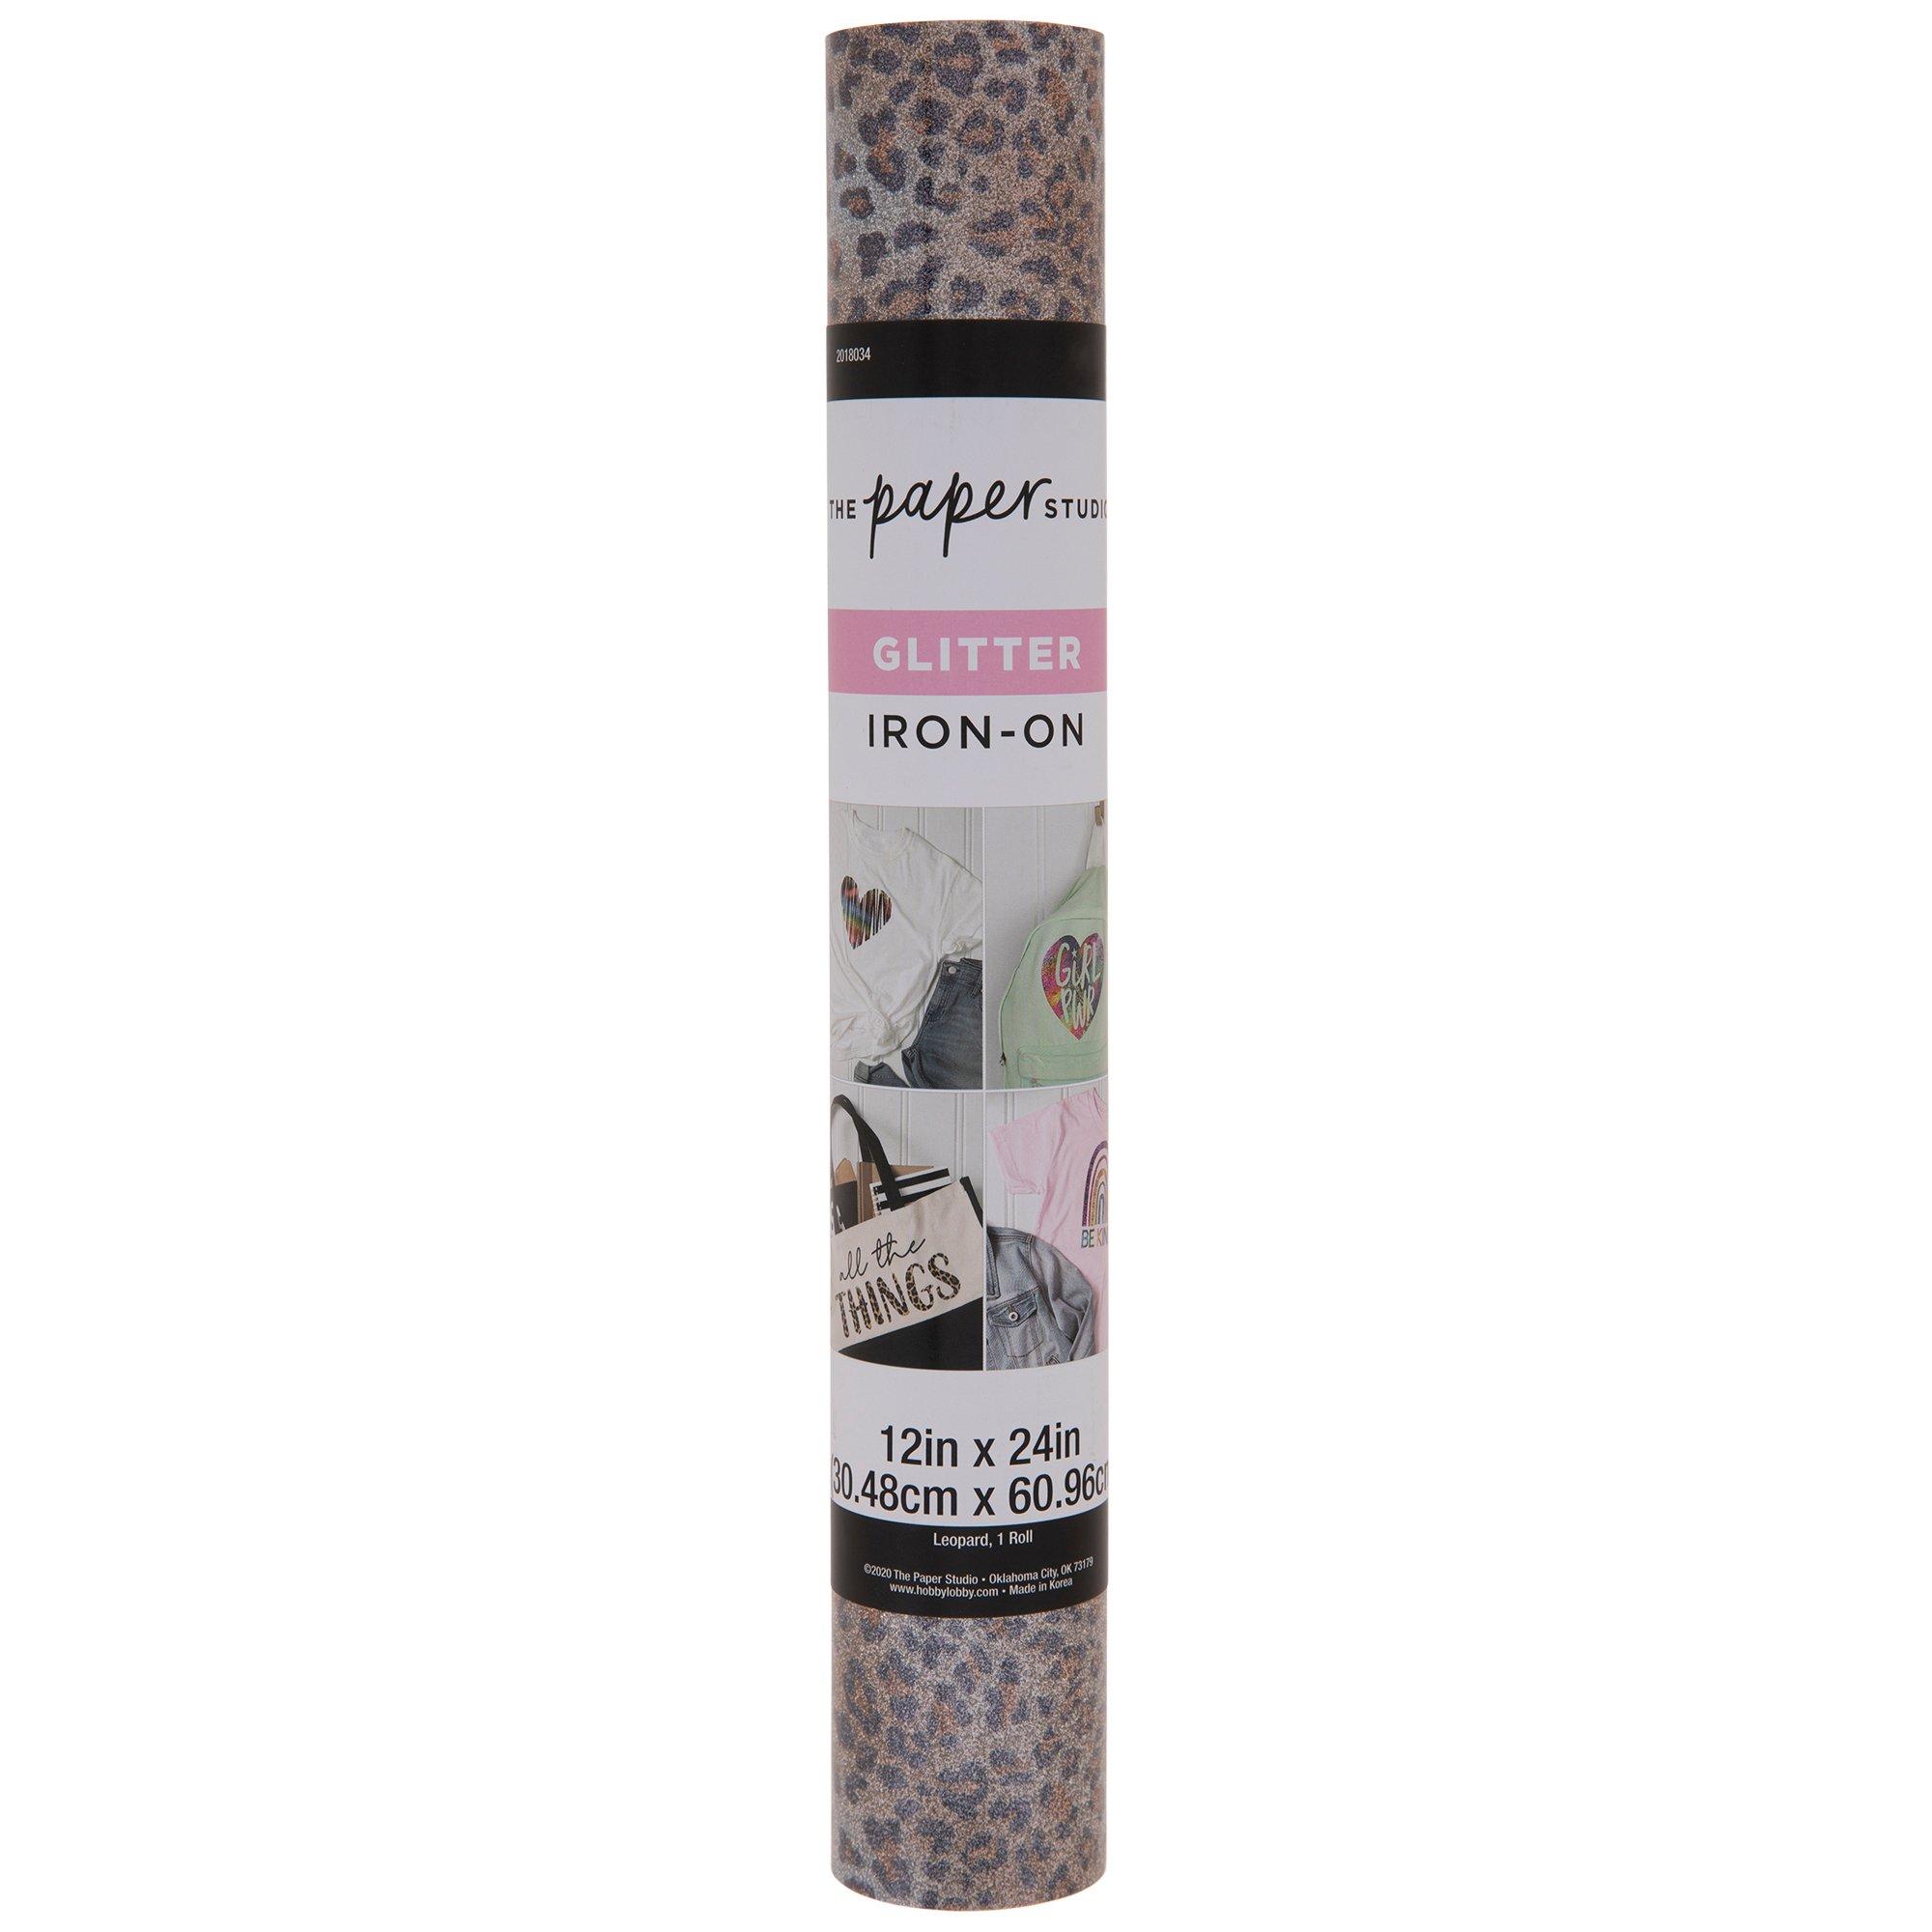 Leopard Themed Glitter Pack - Leopard Print Glitter Bundle - Ultra Fin –  Posh Glitter, LLC